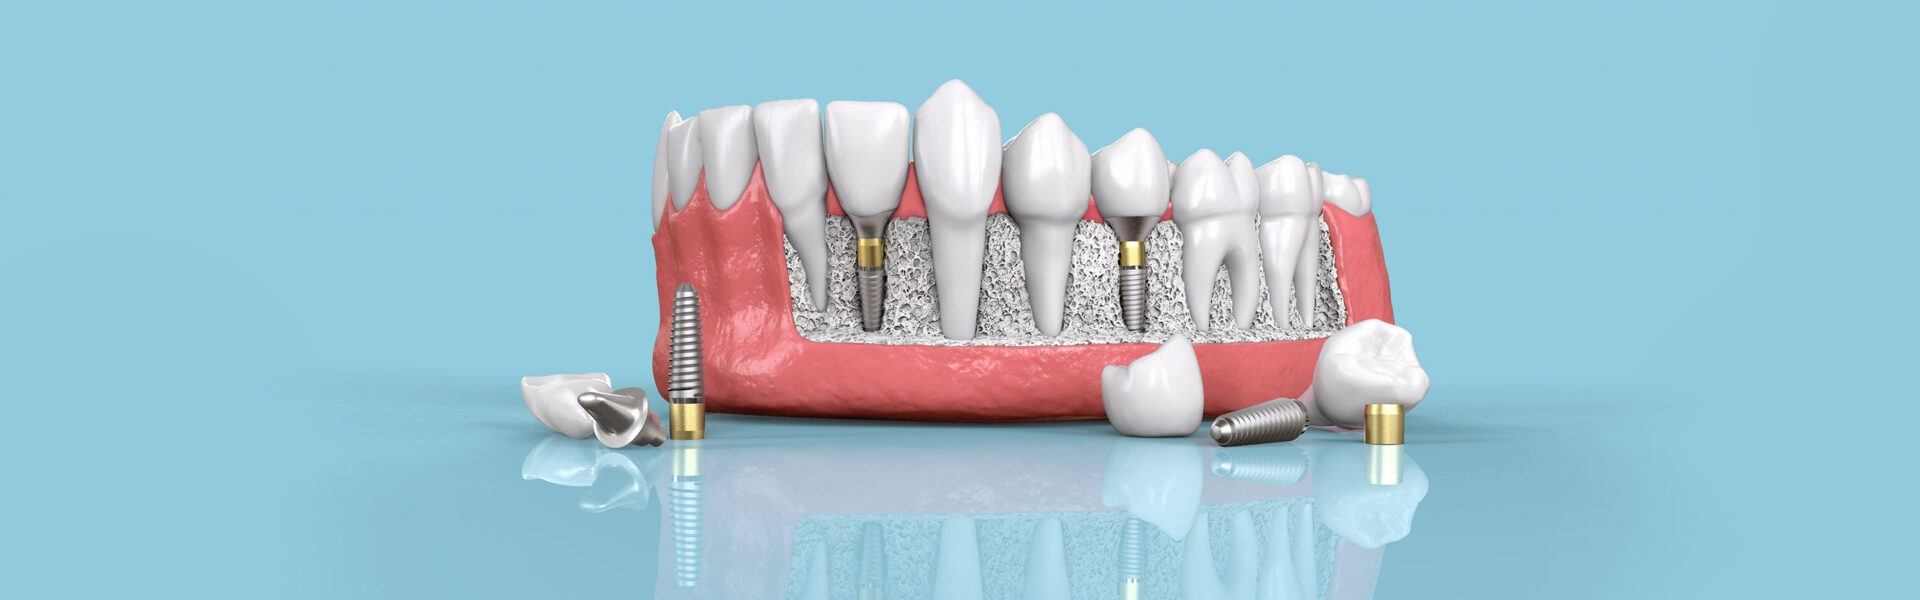 Dental Implants in Largo, FL